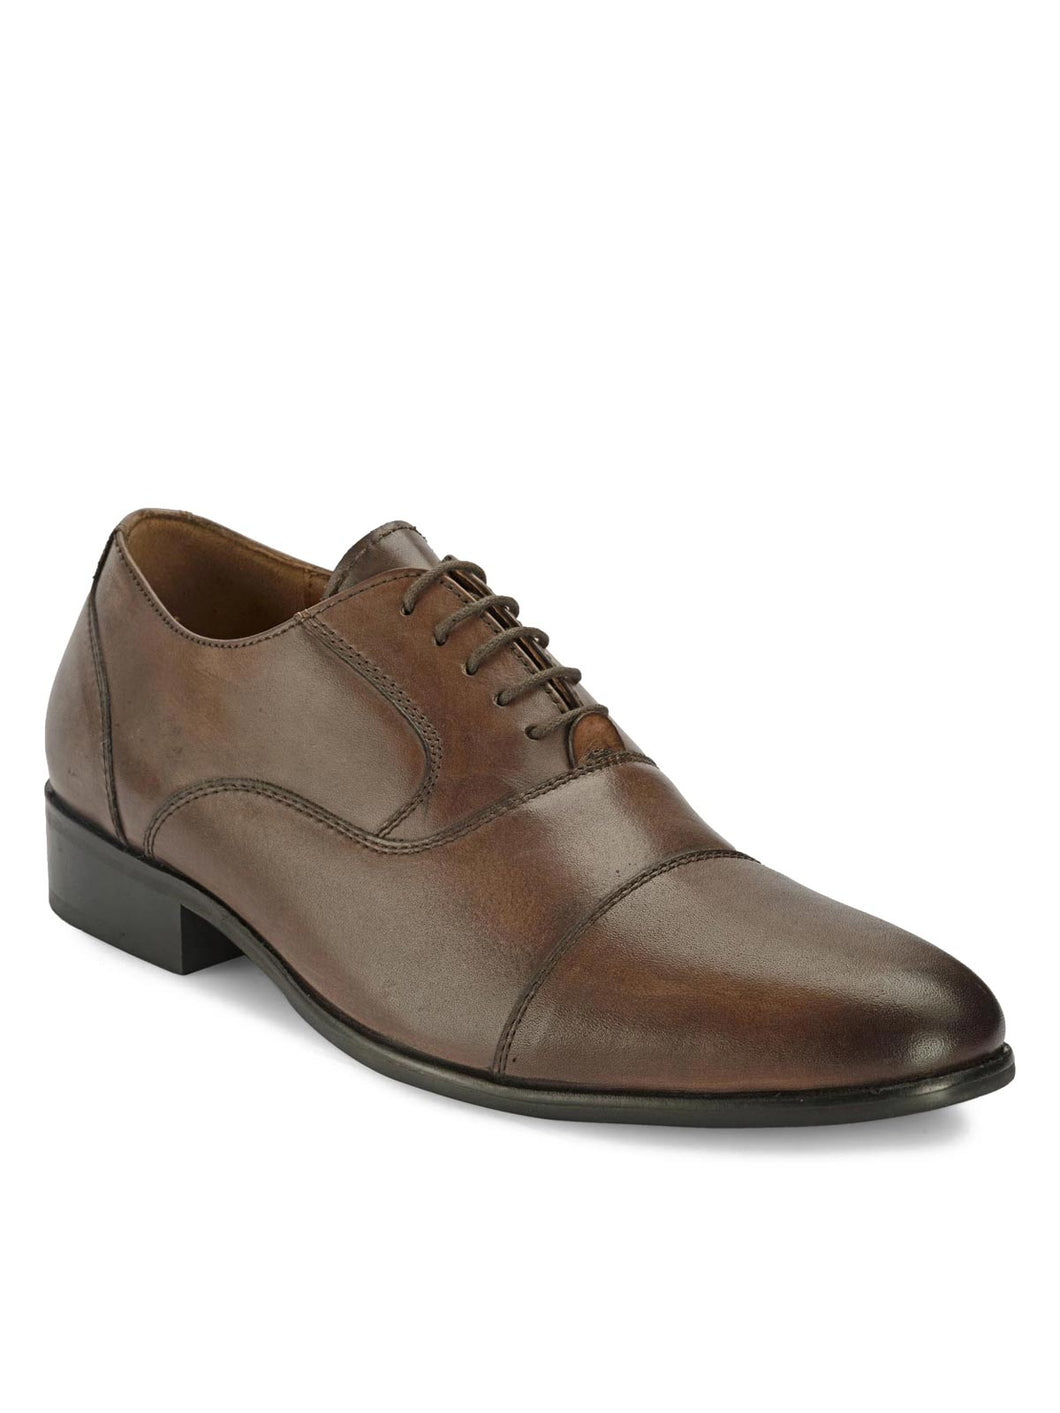 Teakwood Genuine Leather Oxford shoes